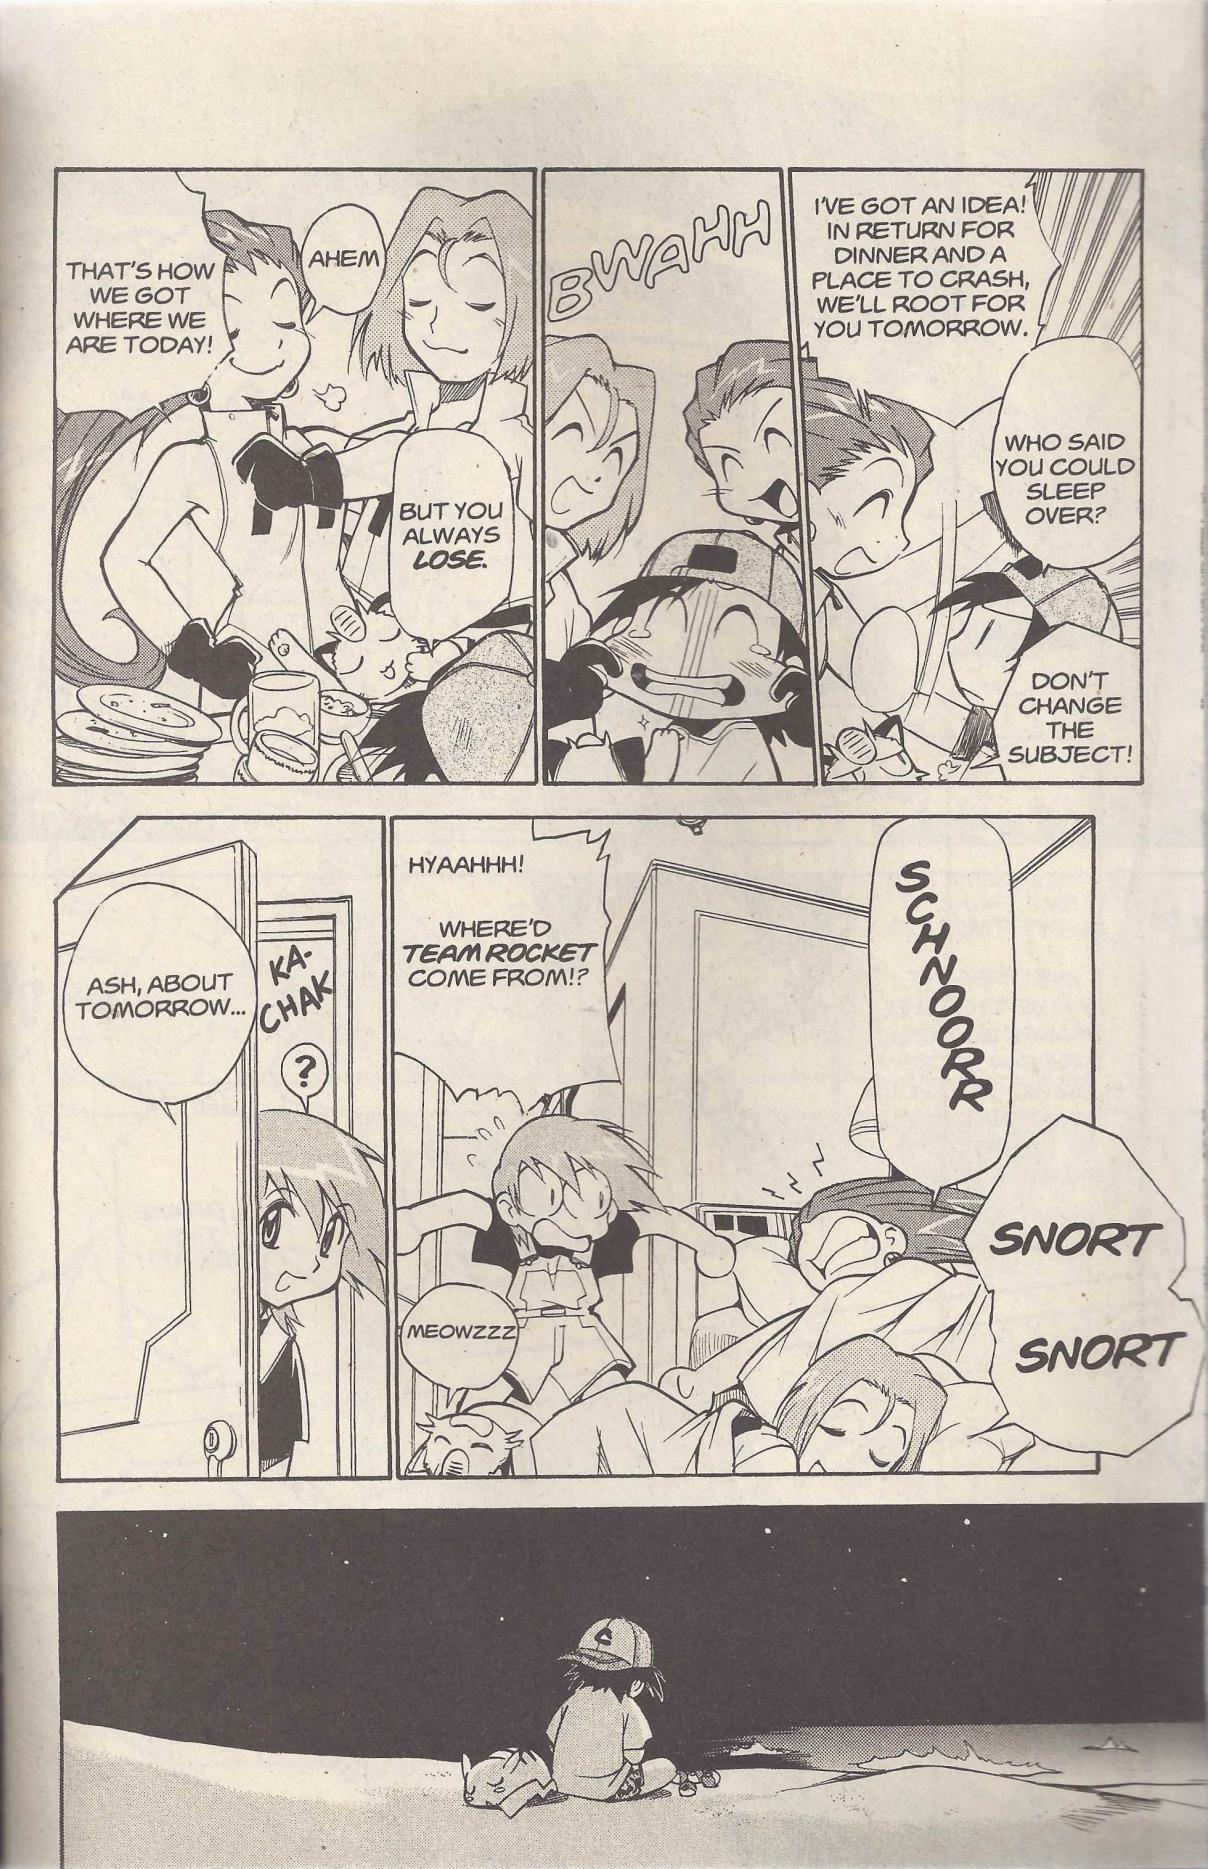 Dengeki Pikachu Vol. 4 Ch. 17 The Orange Crew Supreme Gym Leader